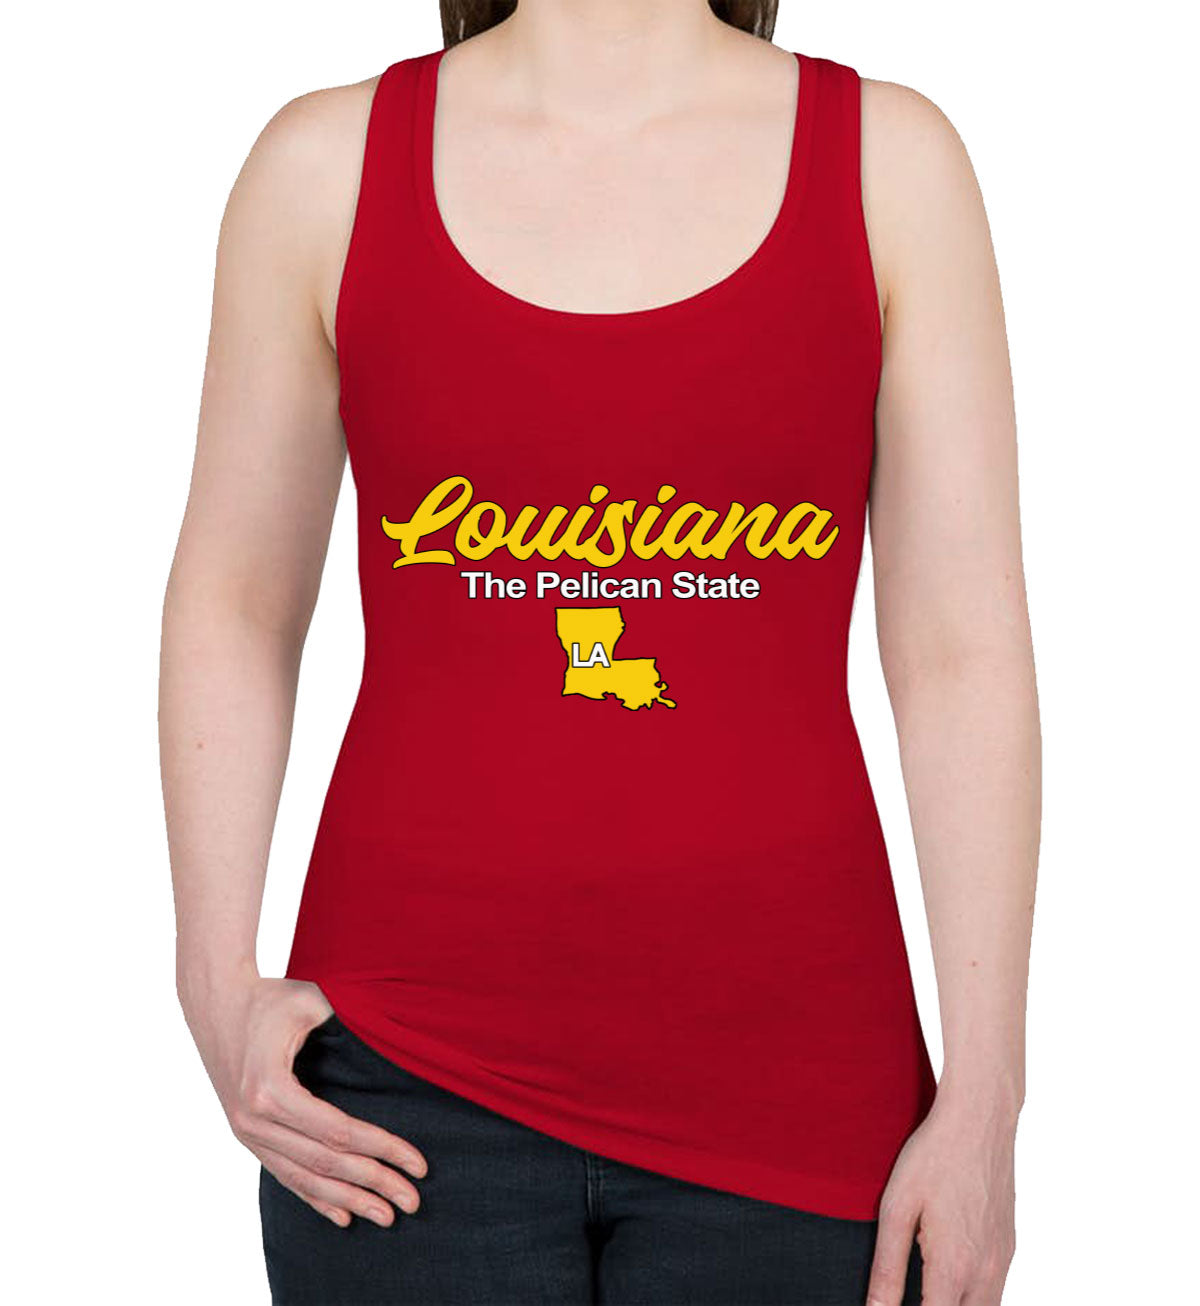 Louisiana The Pelican State Women's Racerback Tank Top